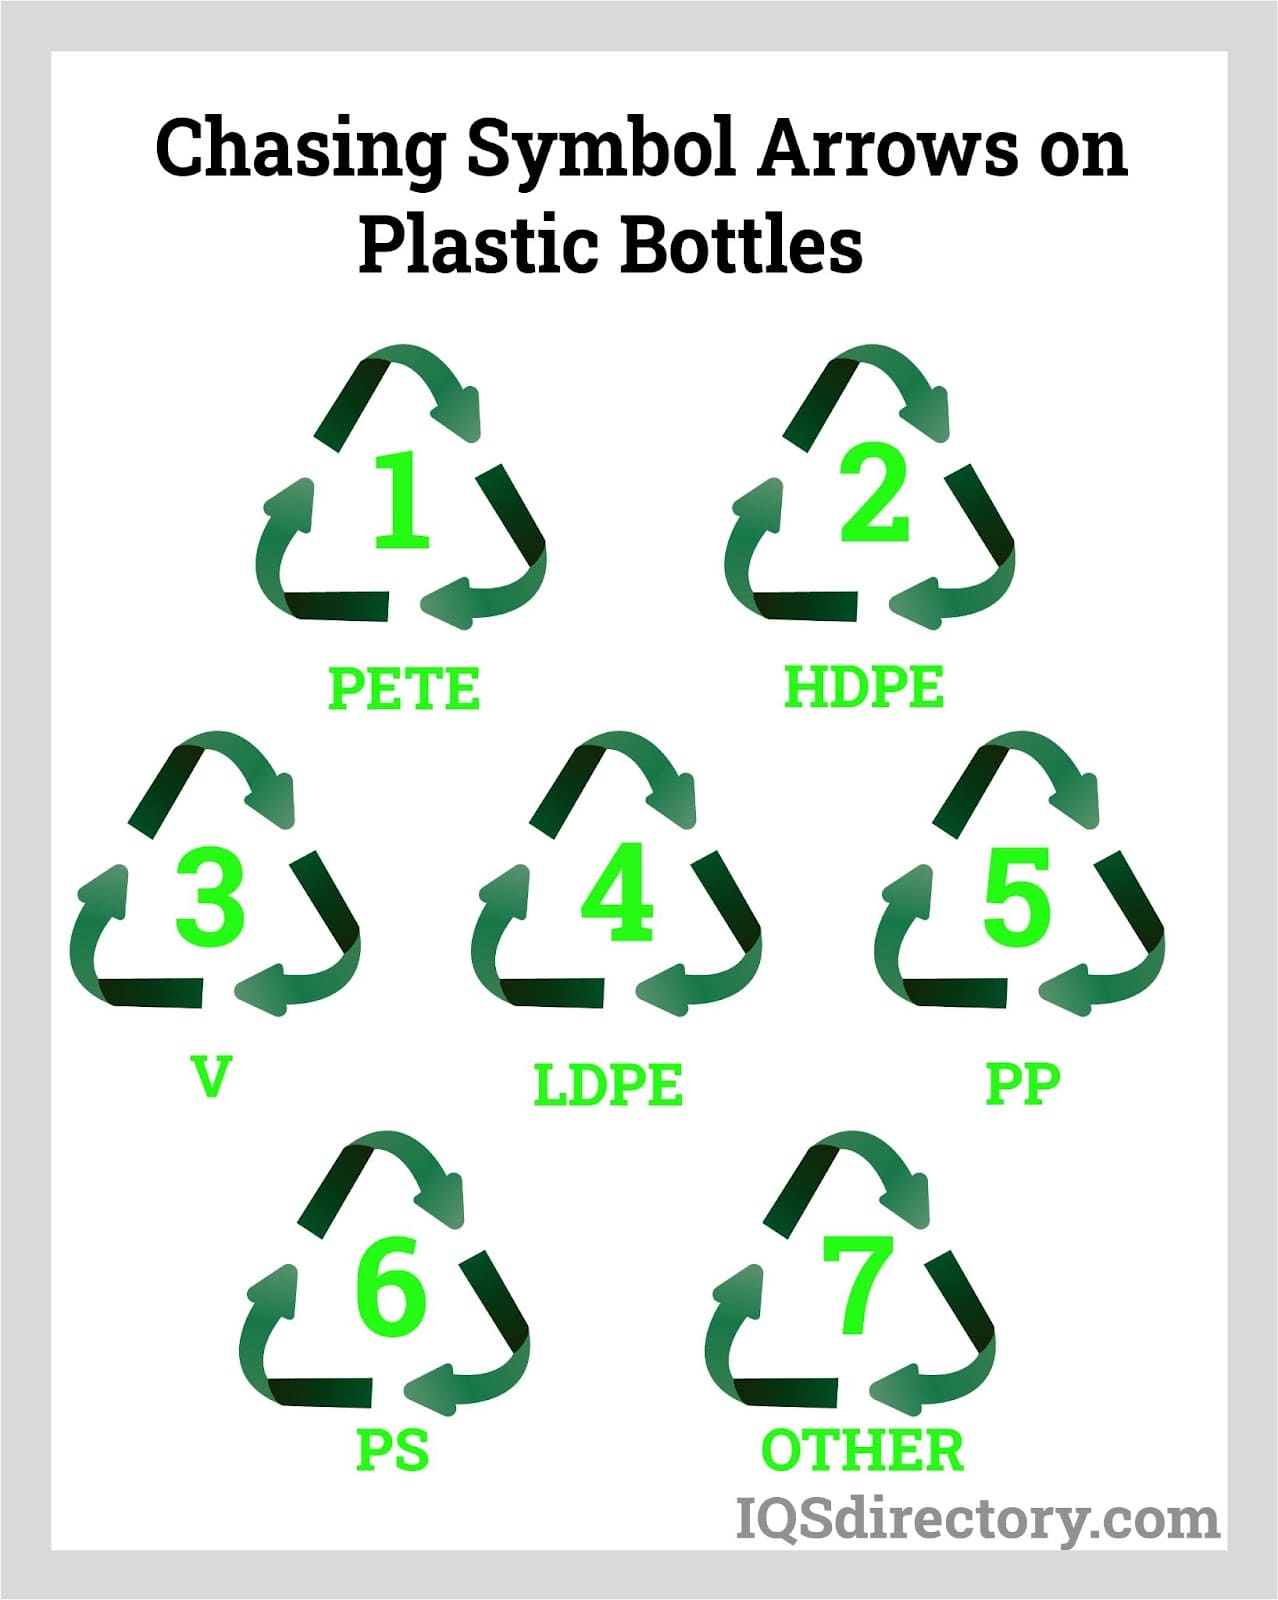 Chasing Symbol Arrows on Plastic Bottles